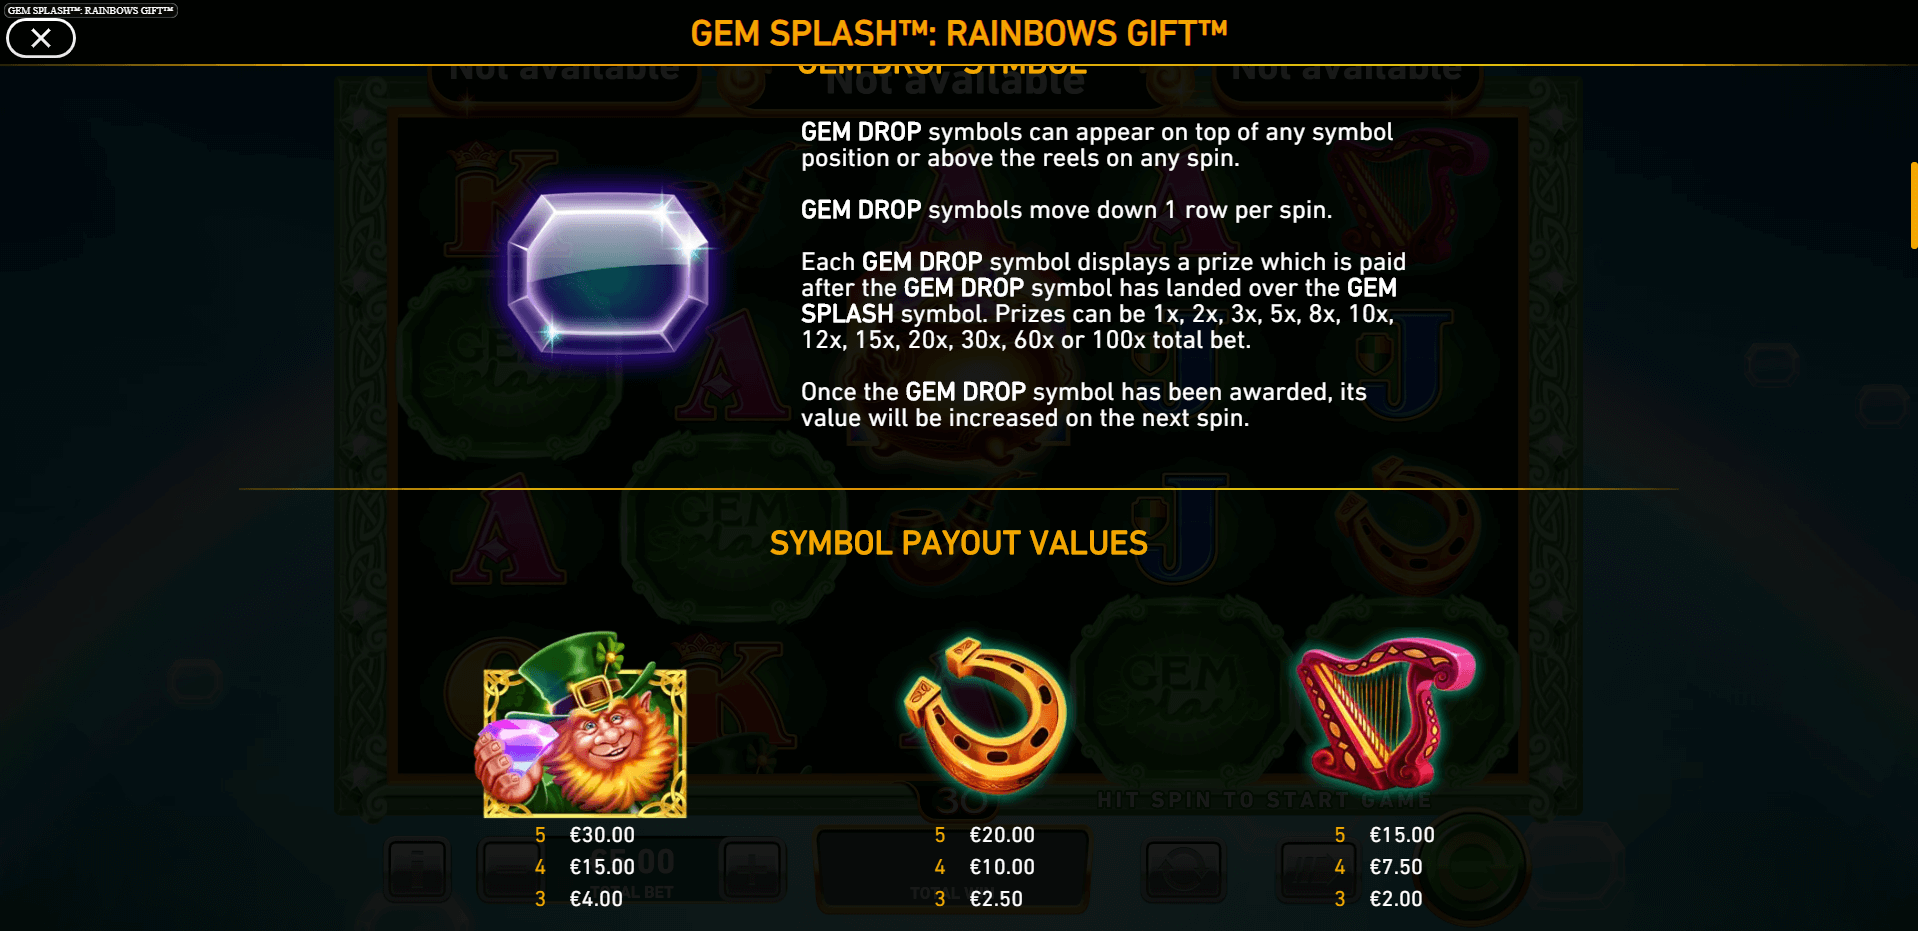 gem splash rainbows gift slot machine detail image 1